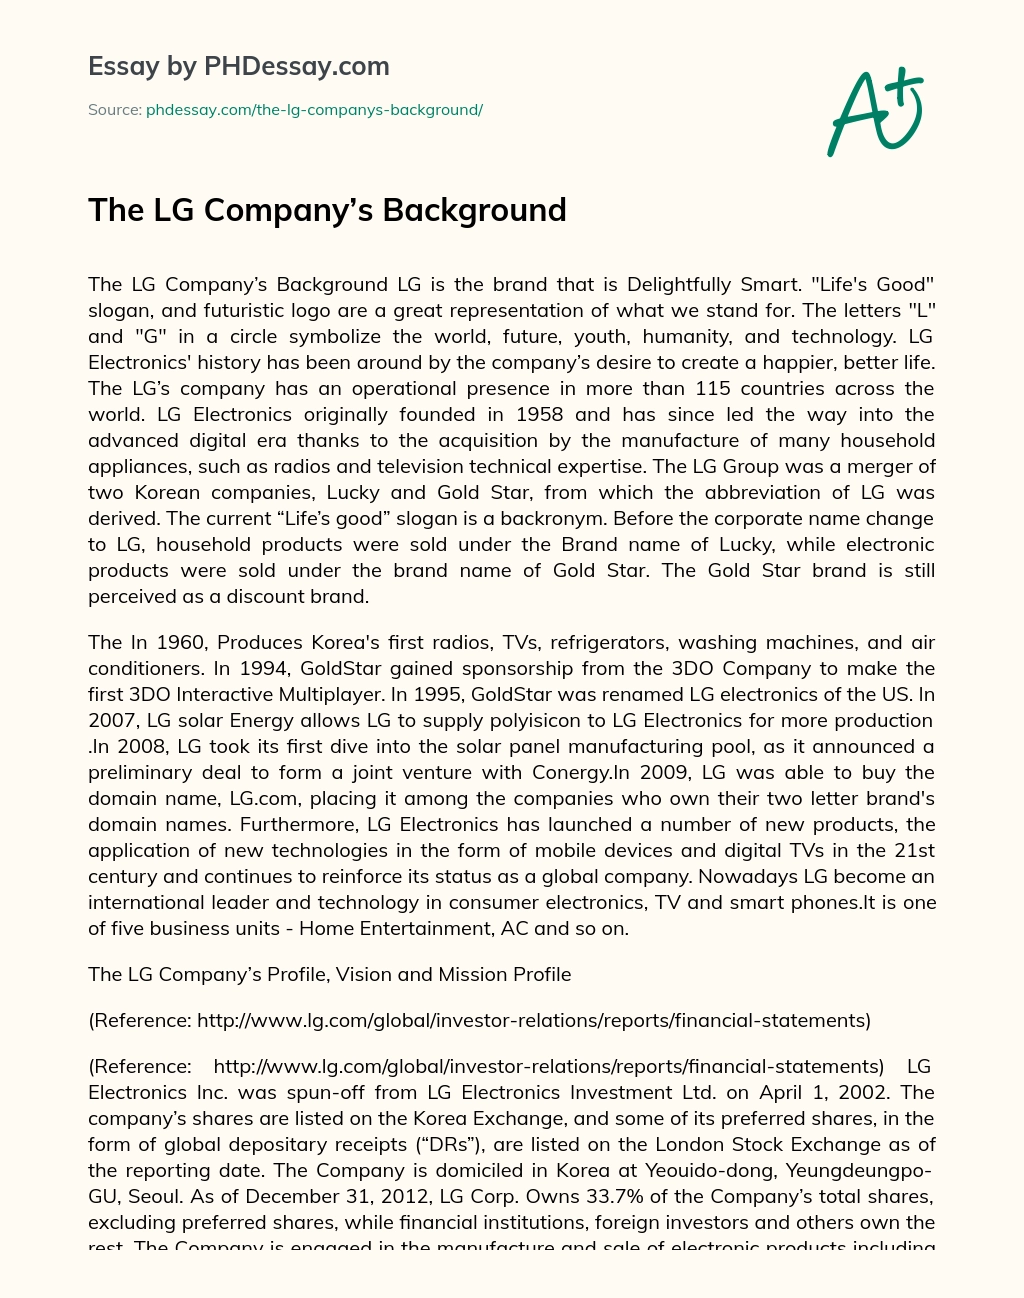 The LG Company’s Background essay